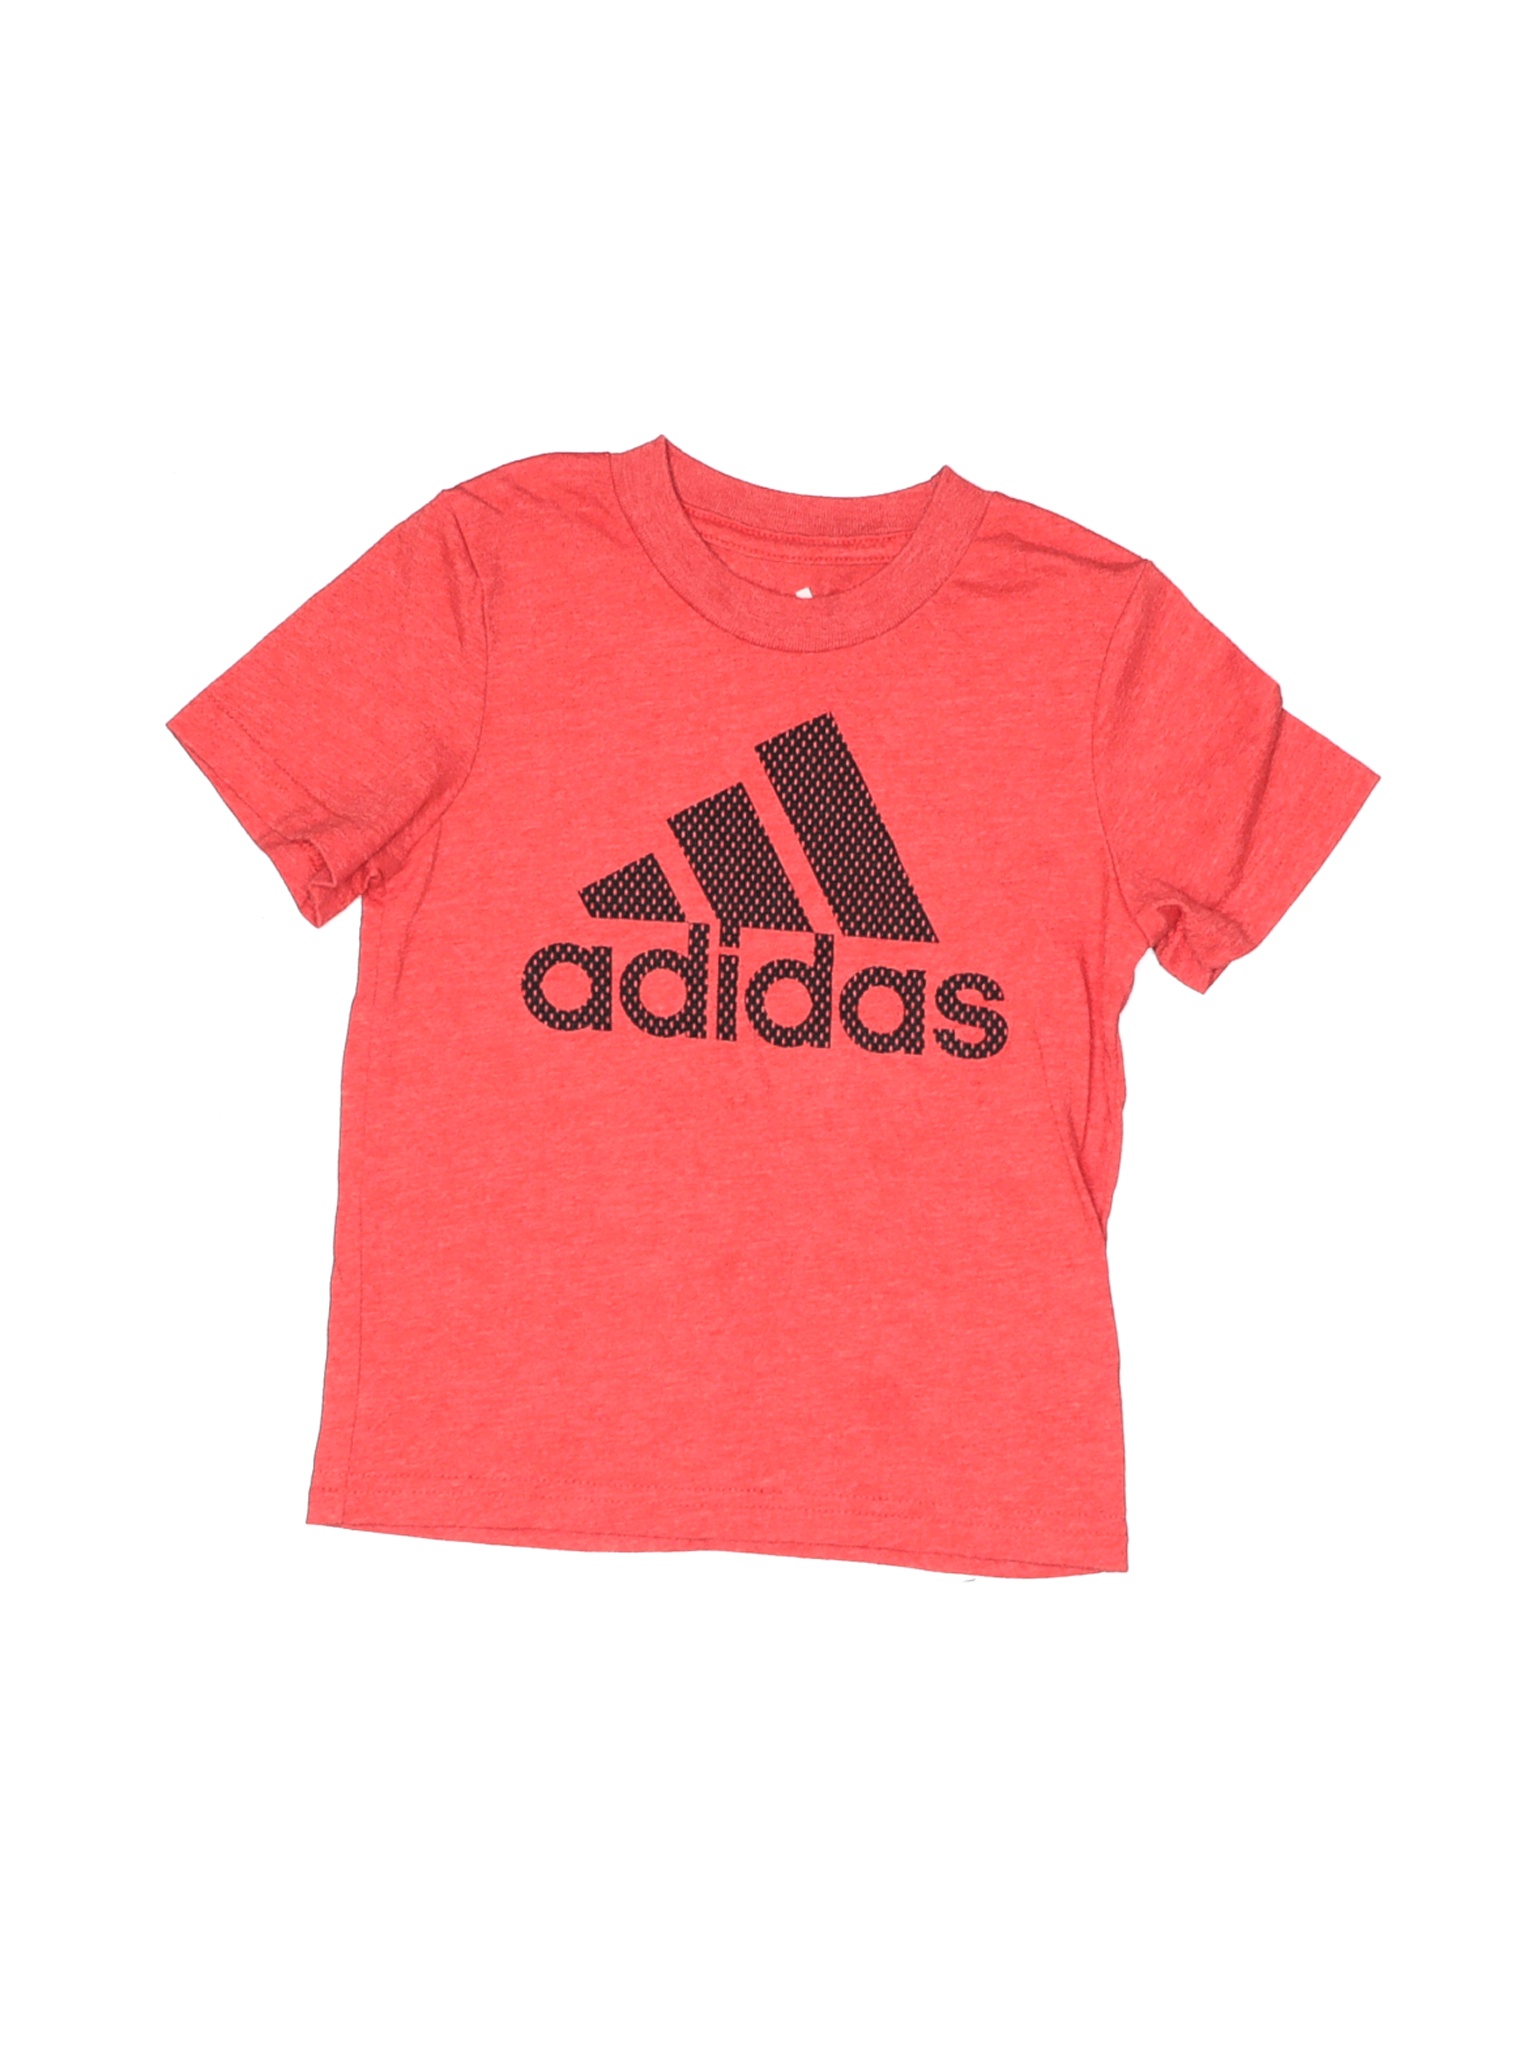 Adidas Boys Pink Short Sleeve T-Shirt 2T | eBay